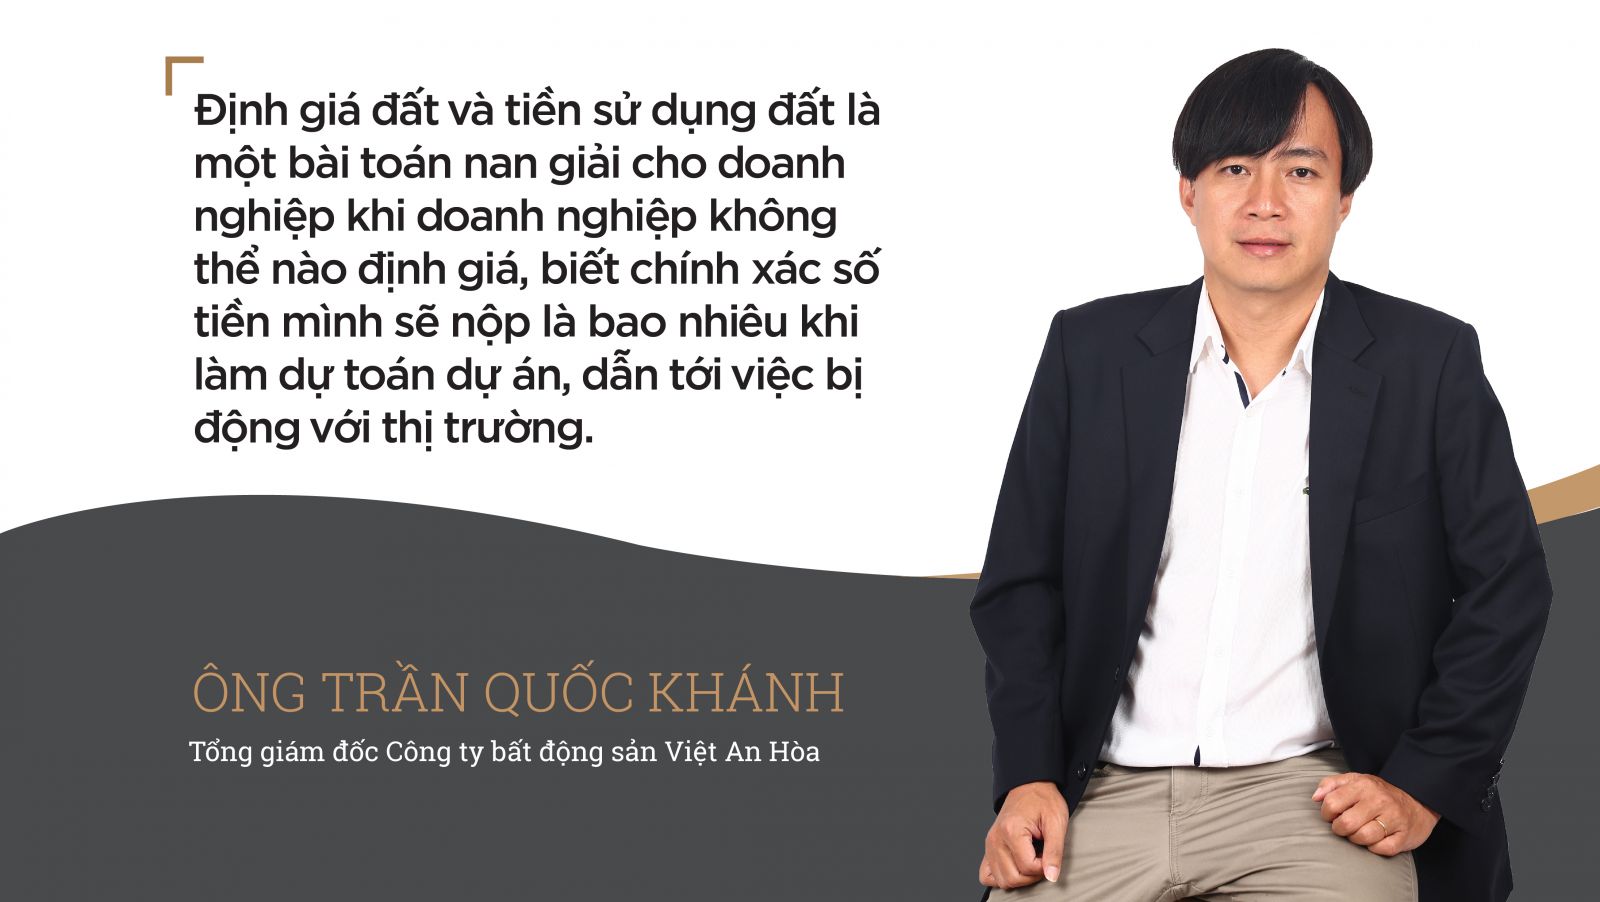 Ong Tran Quoc Khanh